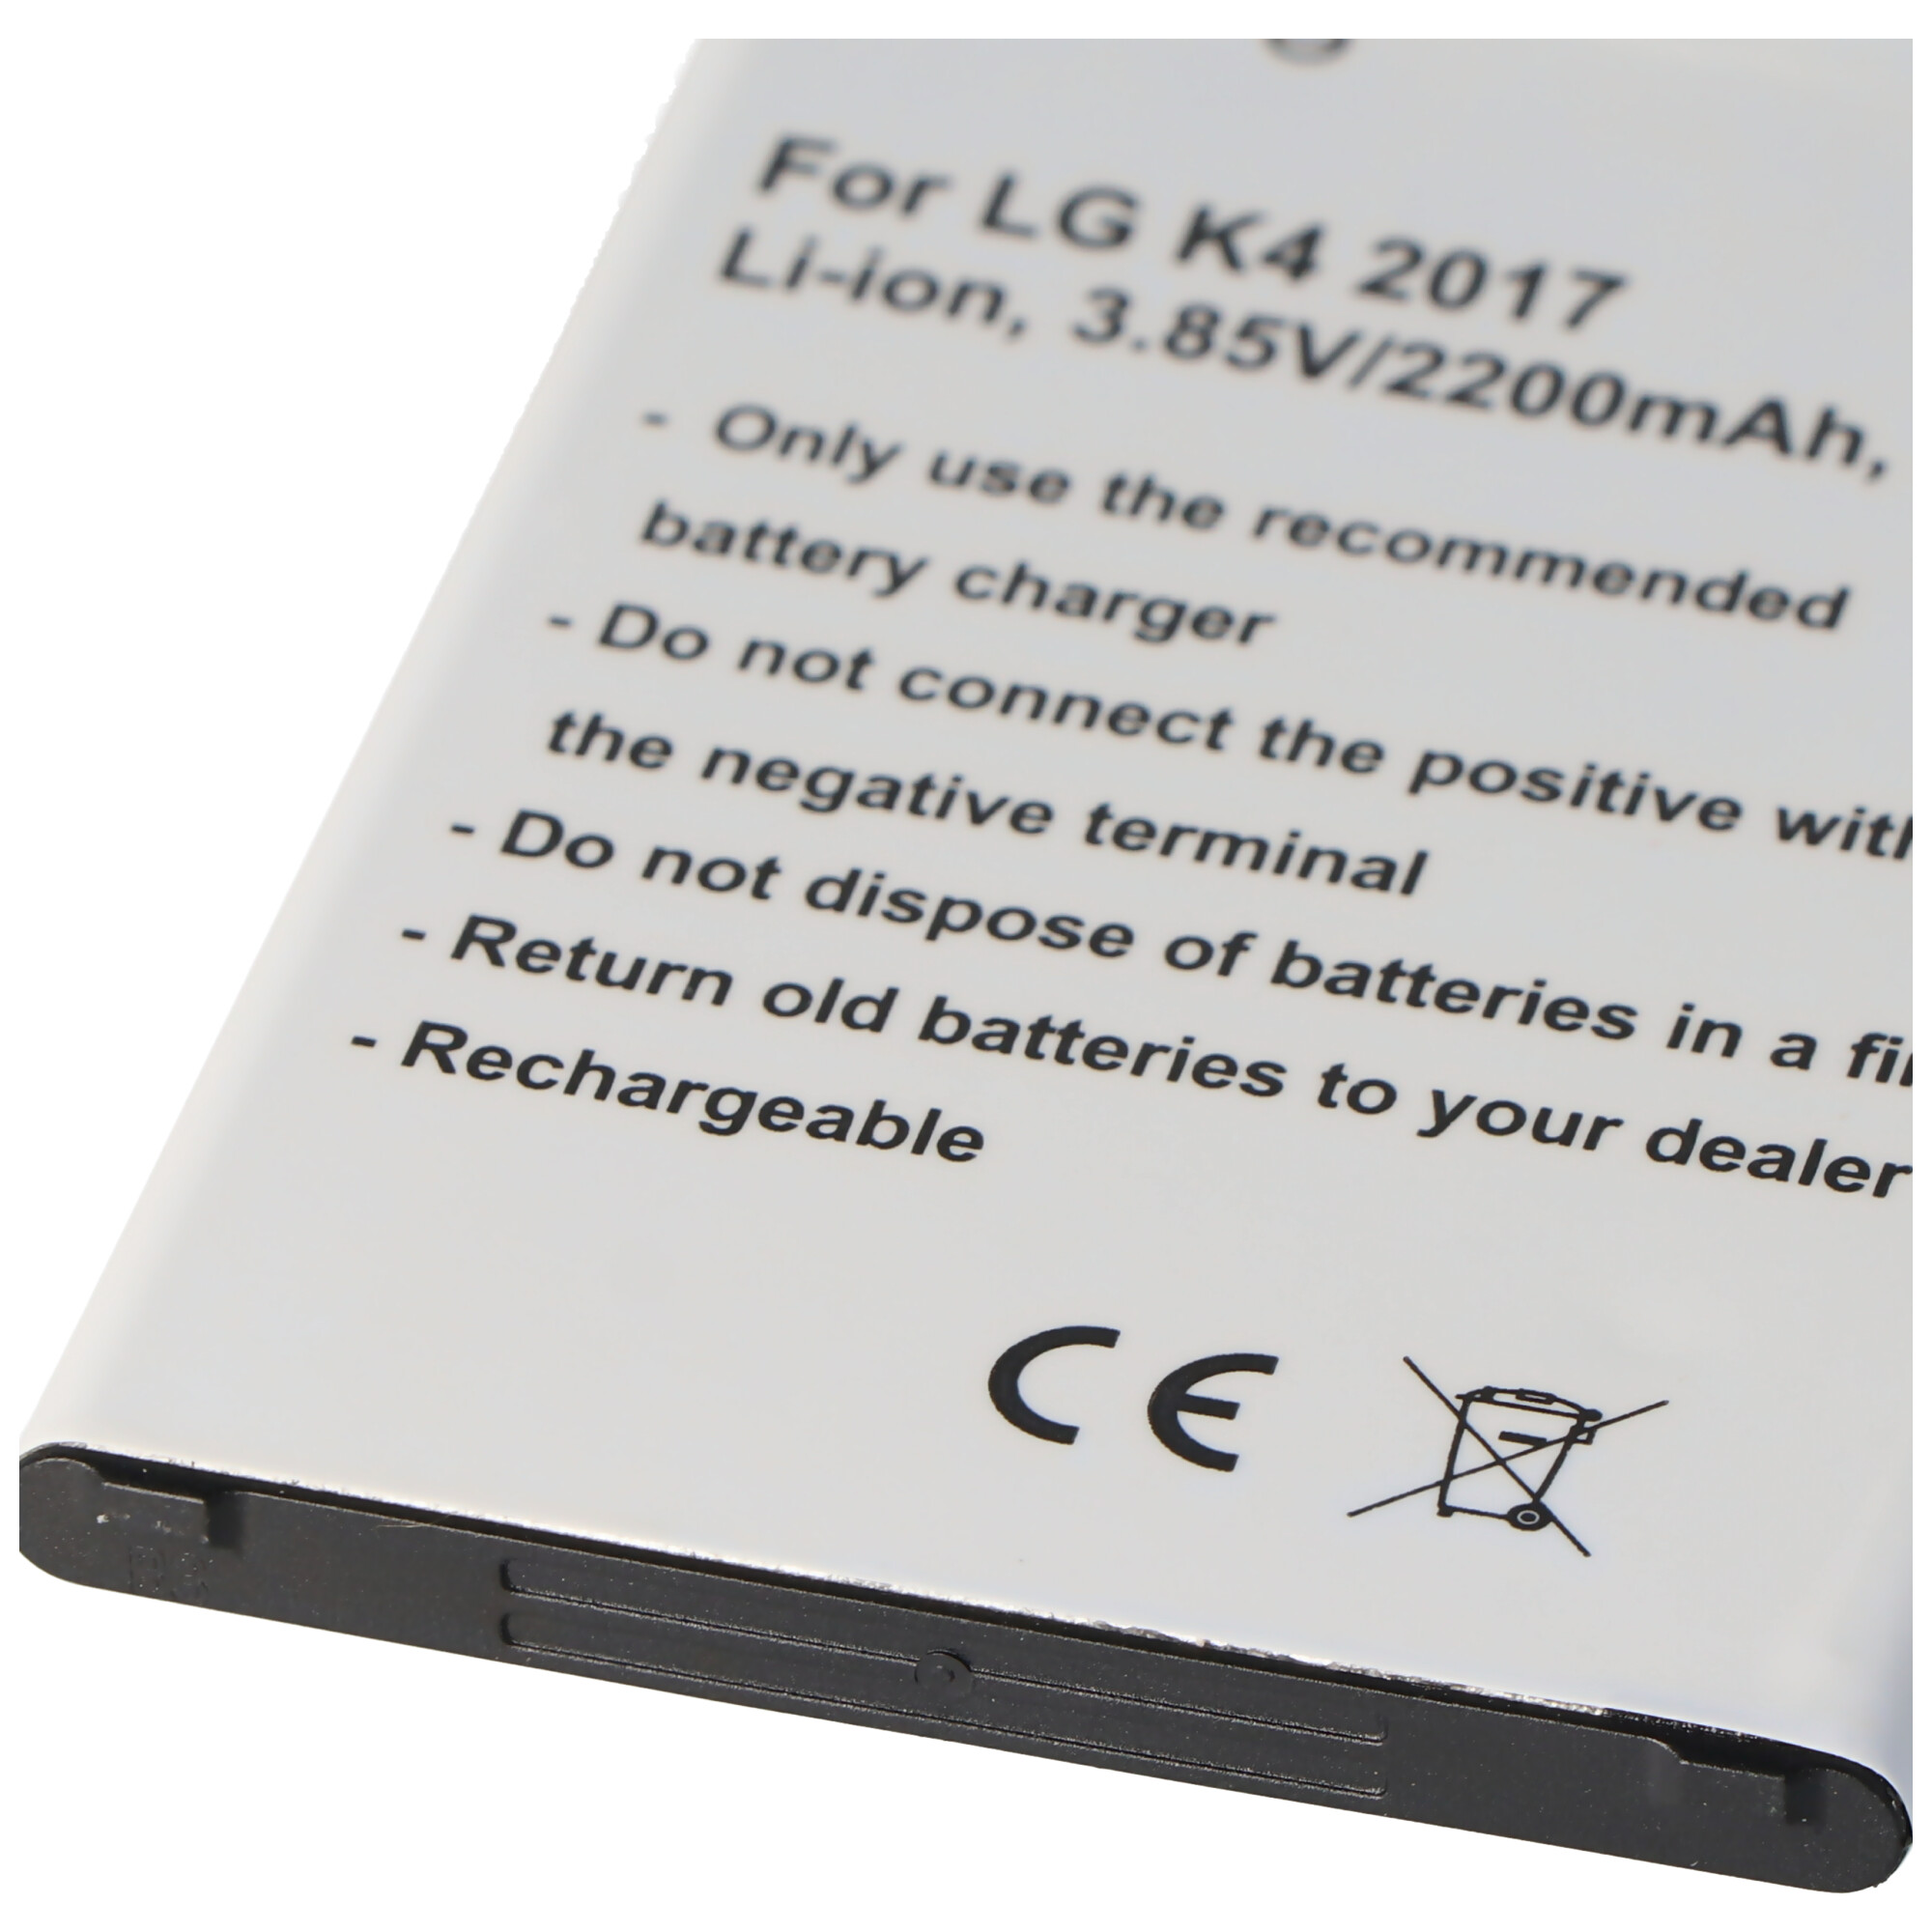 Akku passend für LG K4 2017, Li-Ion, 3,85V, 2200mAh, 8,5Wh